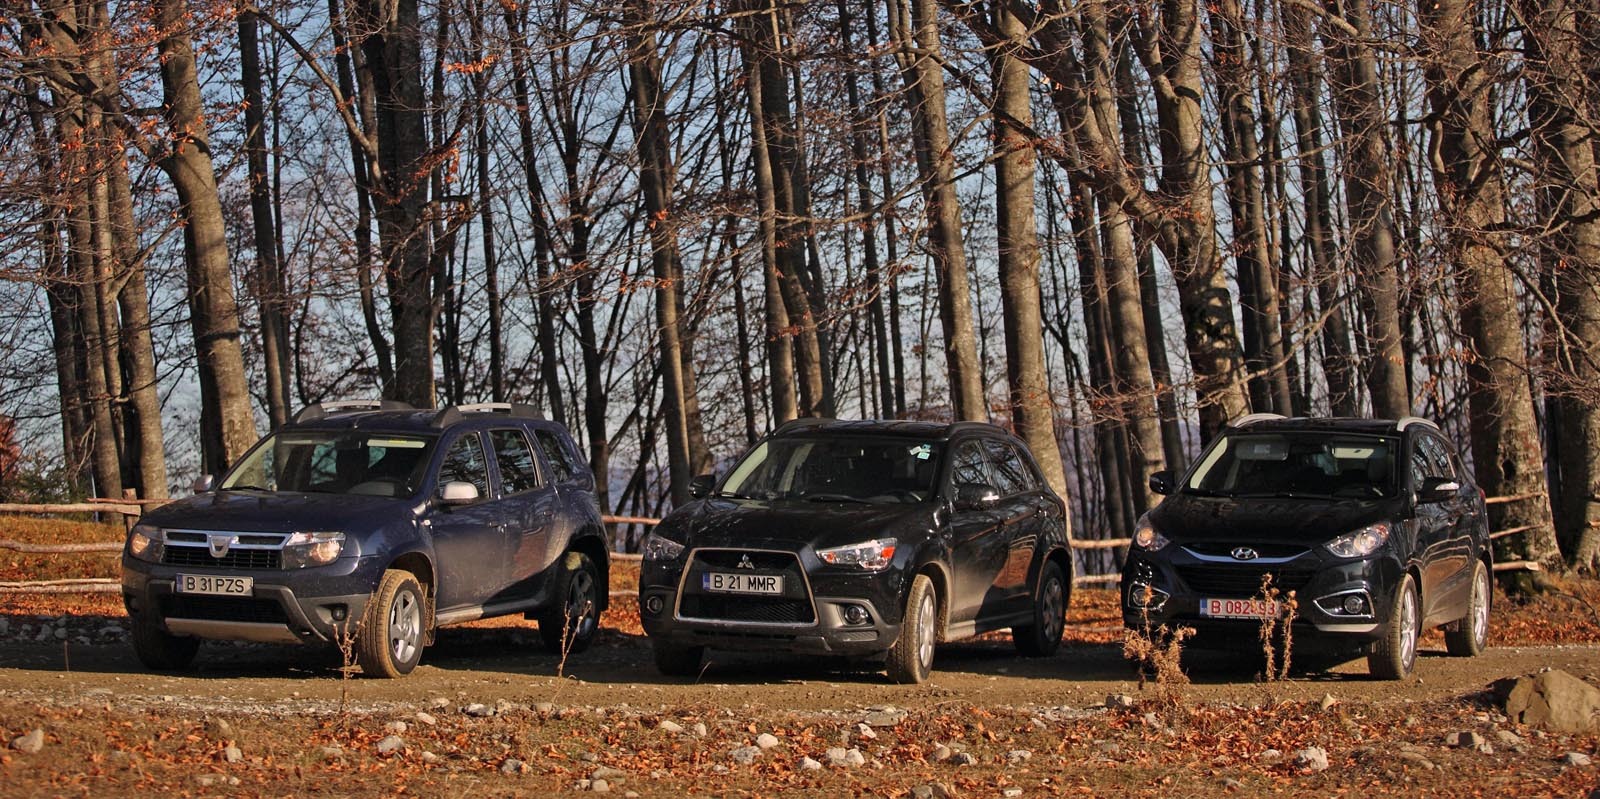 Trei dintre cele mai ieftine oferte de SUV-uri: Dacia Duster, Mitsubishi ASX, Hyundai ix35